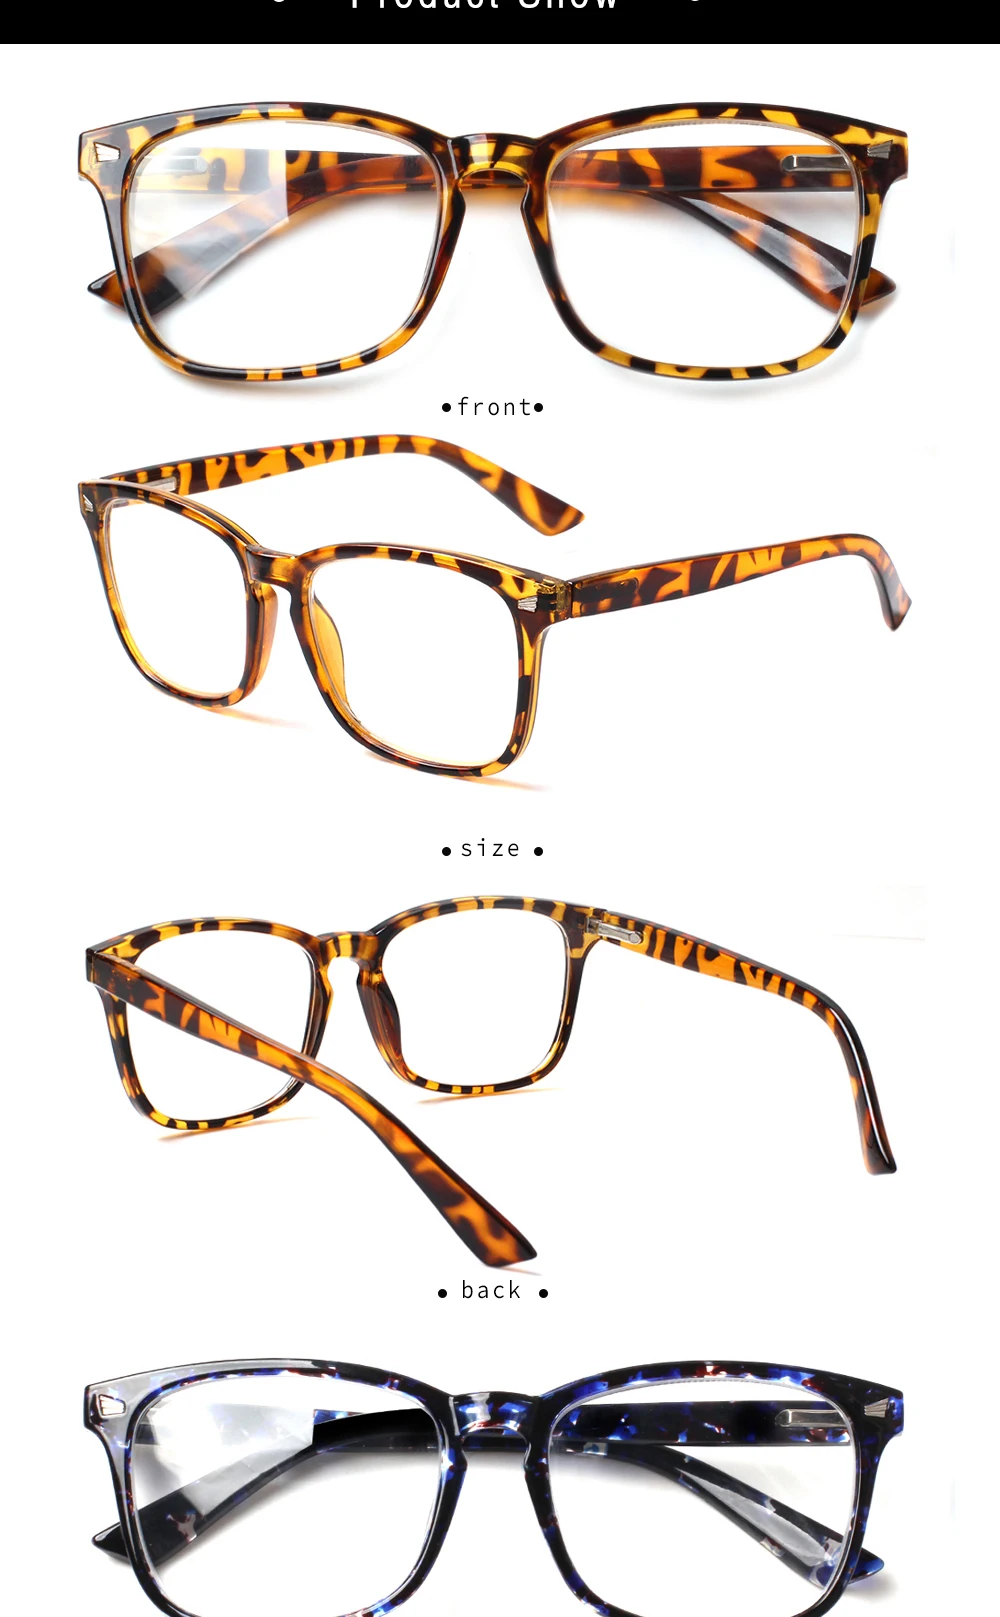 Turezing Spring Hinge Reading Glasses Men and Women Rectangular Frame Presbyopia HD Reader Eyeglasses Diopter +1.0+2.0+4.0+6.0